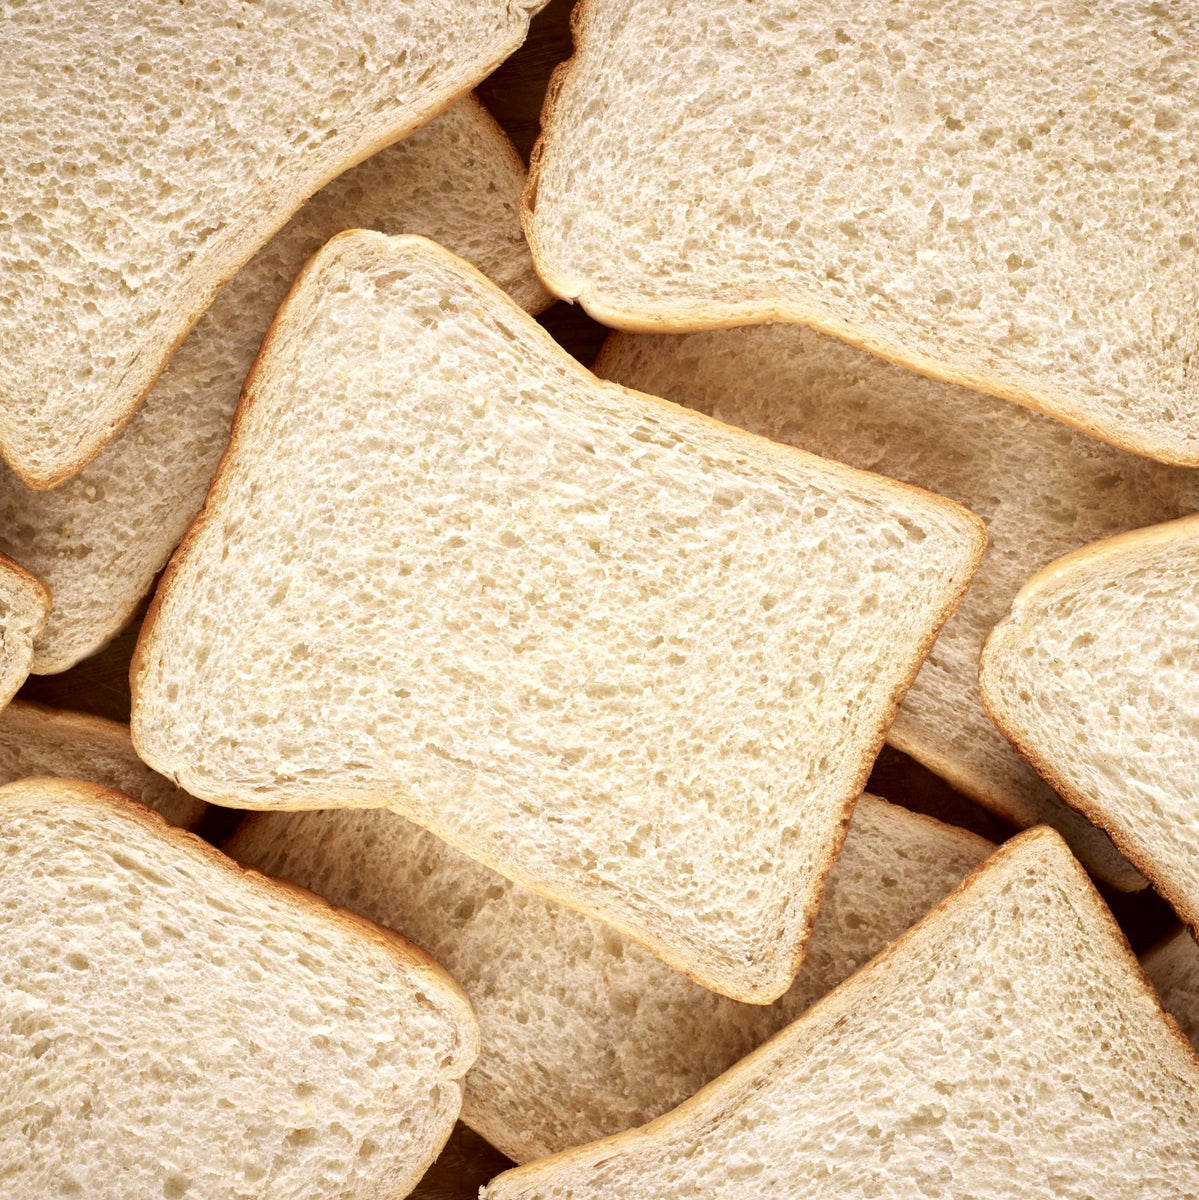 A macro image of white bread